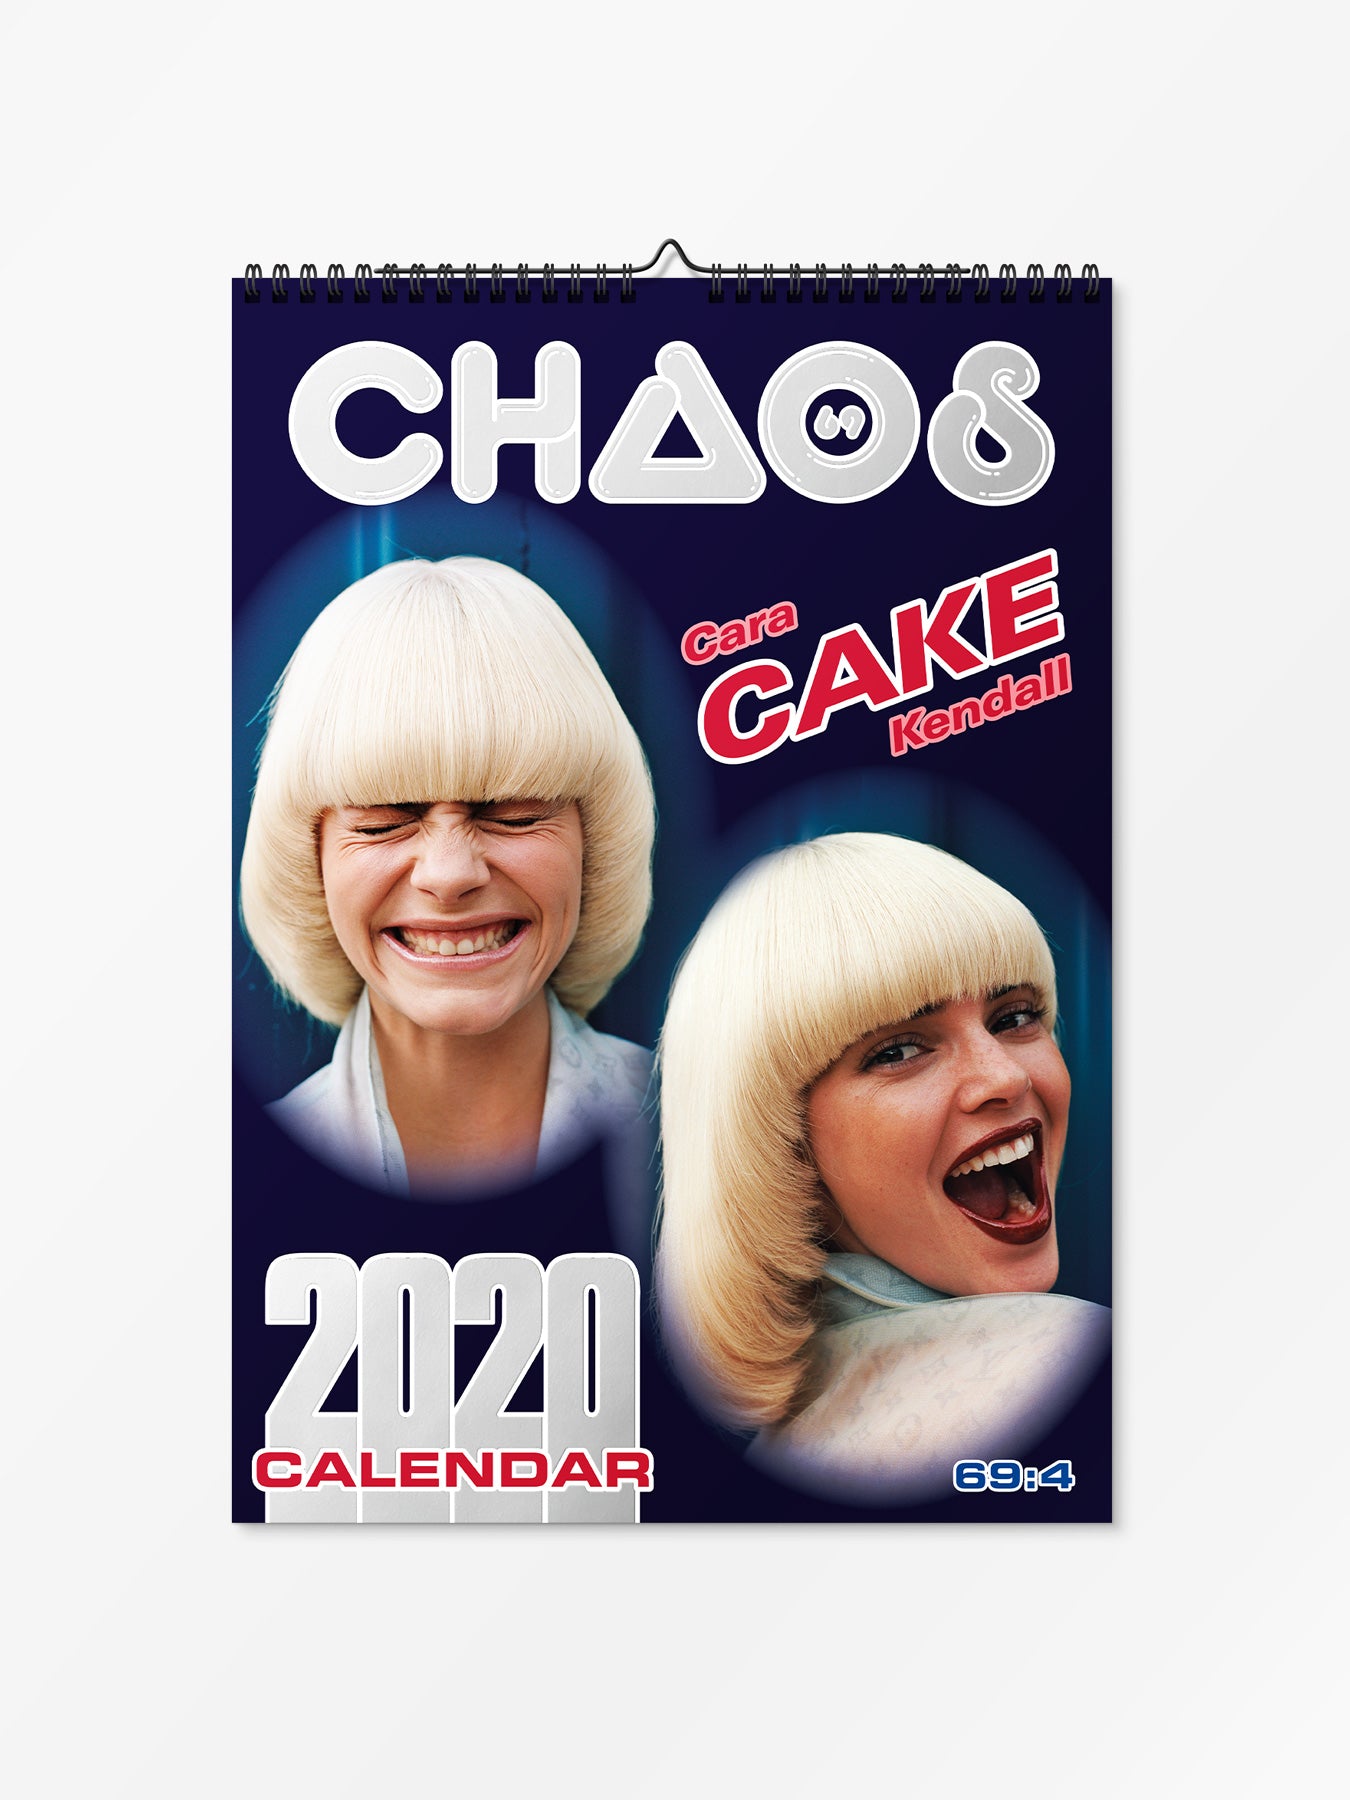 Chaos 69 Calendar Issue 4 - Cover 1